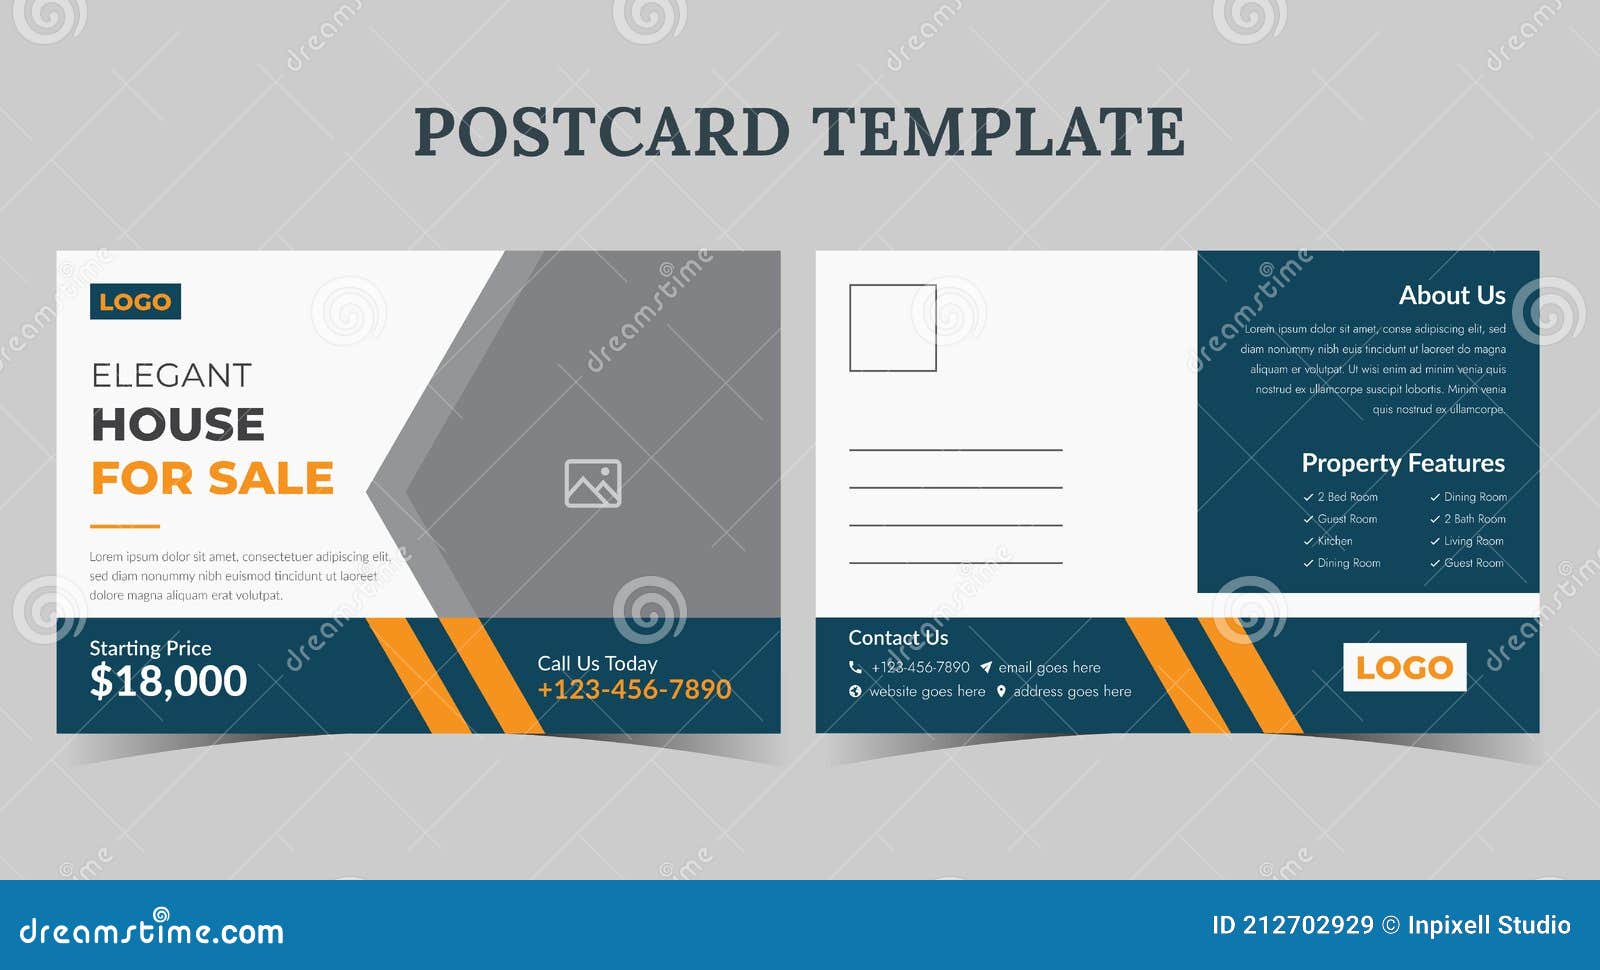 Real Estate Postcard Template, Home for Sale Postcard, Postcard Pertaining To Real Estate Postcard Design Templates